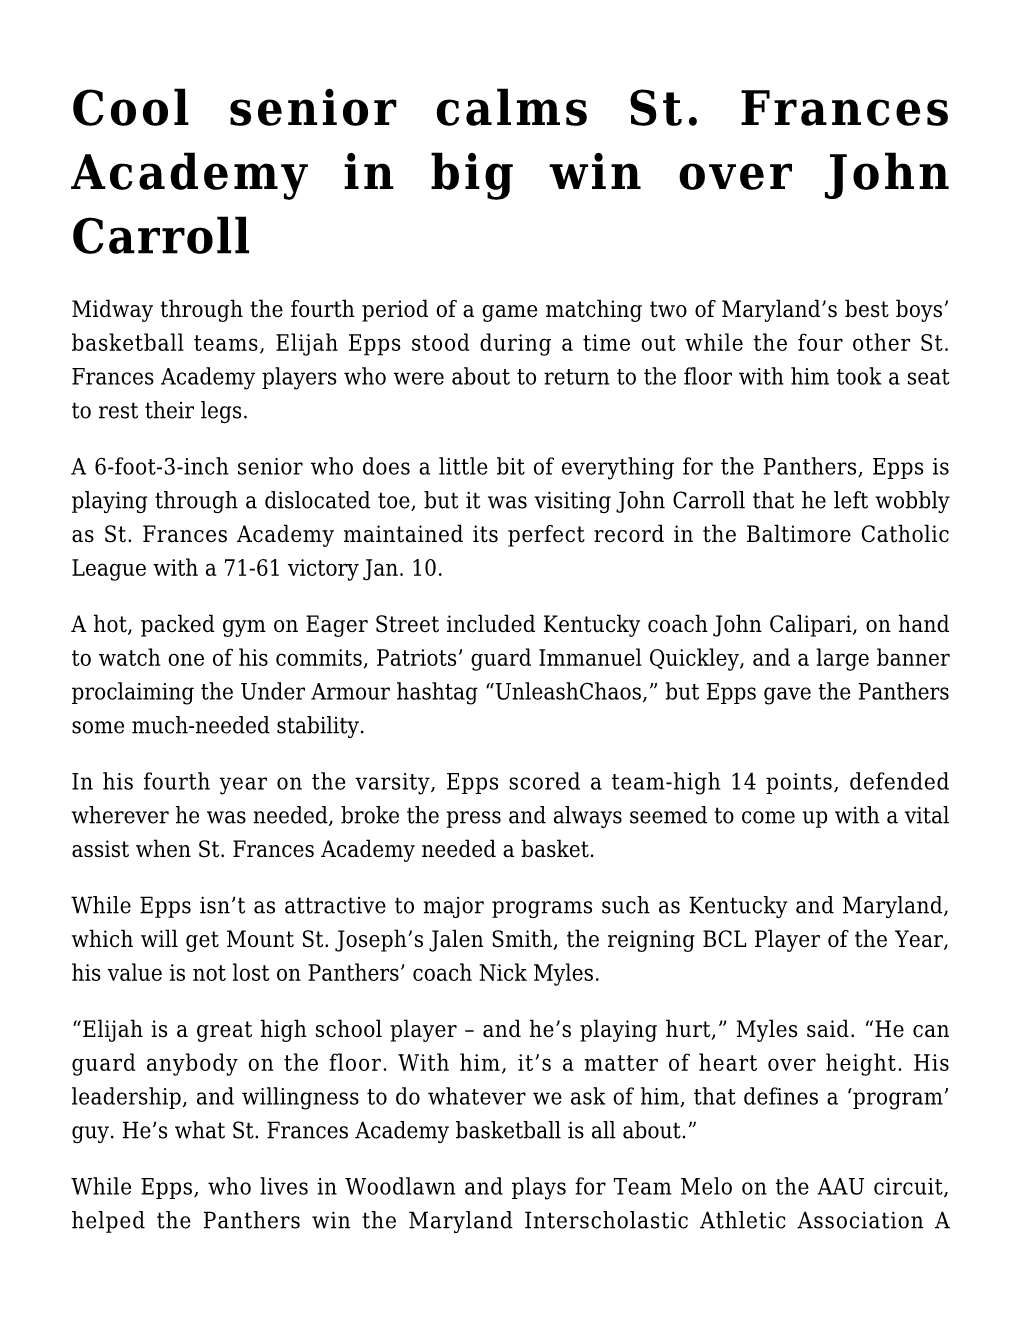 Cool Senior Calms St. Frances Academy in Big Win Over John Carroll